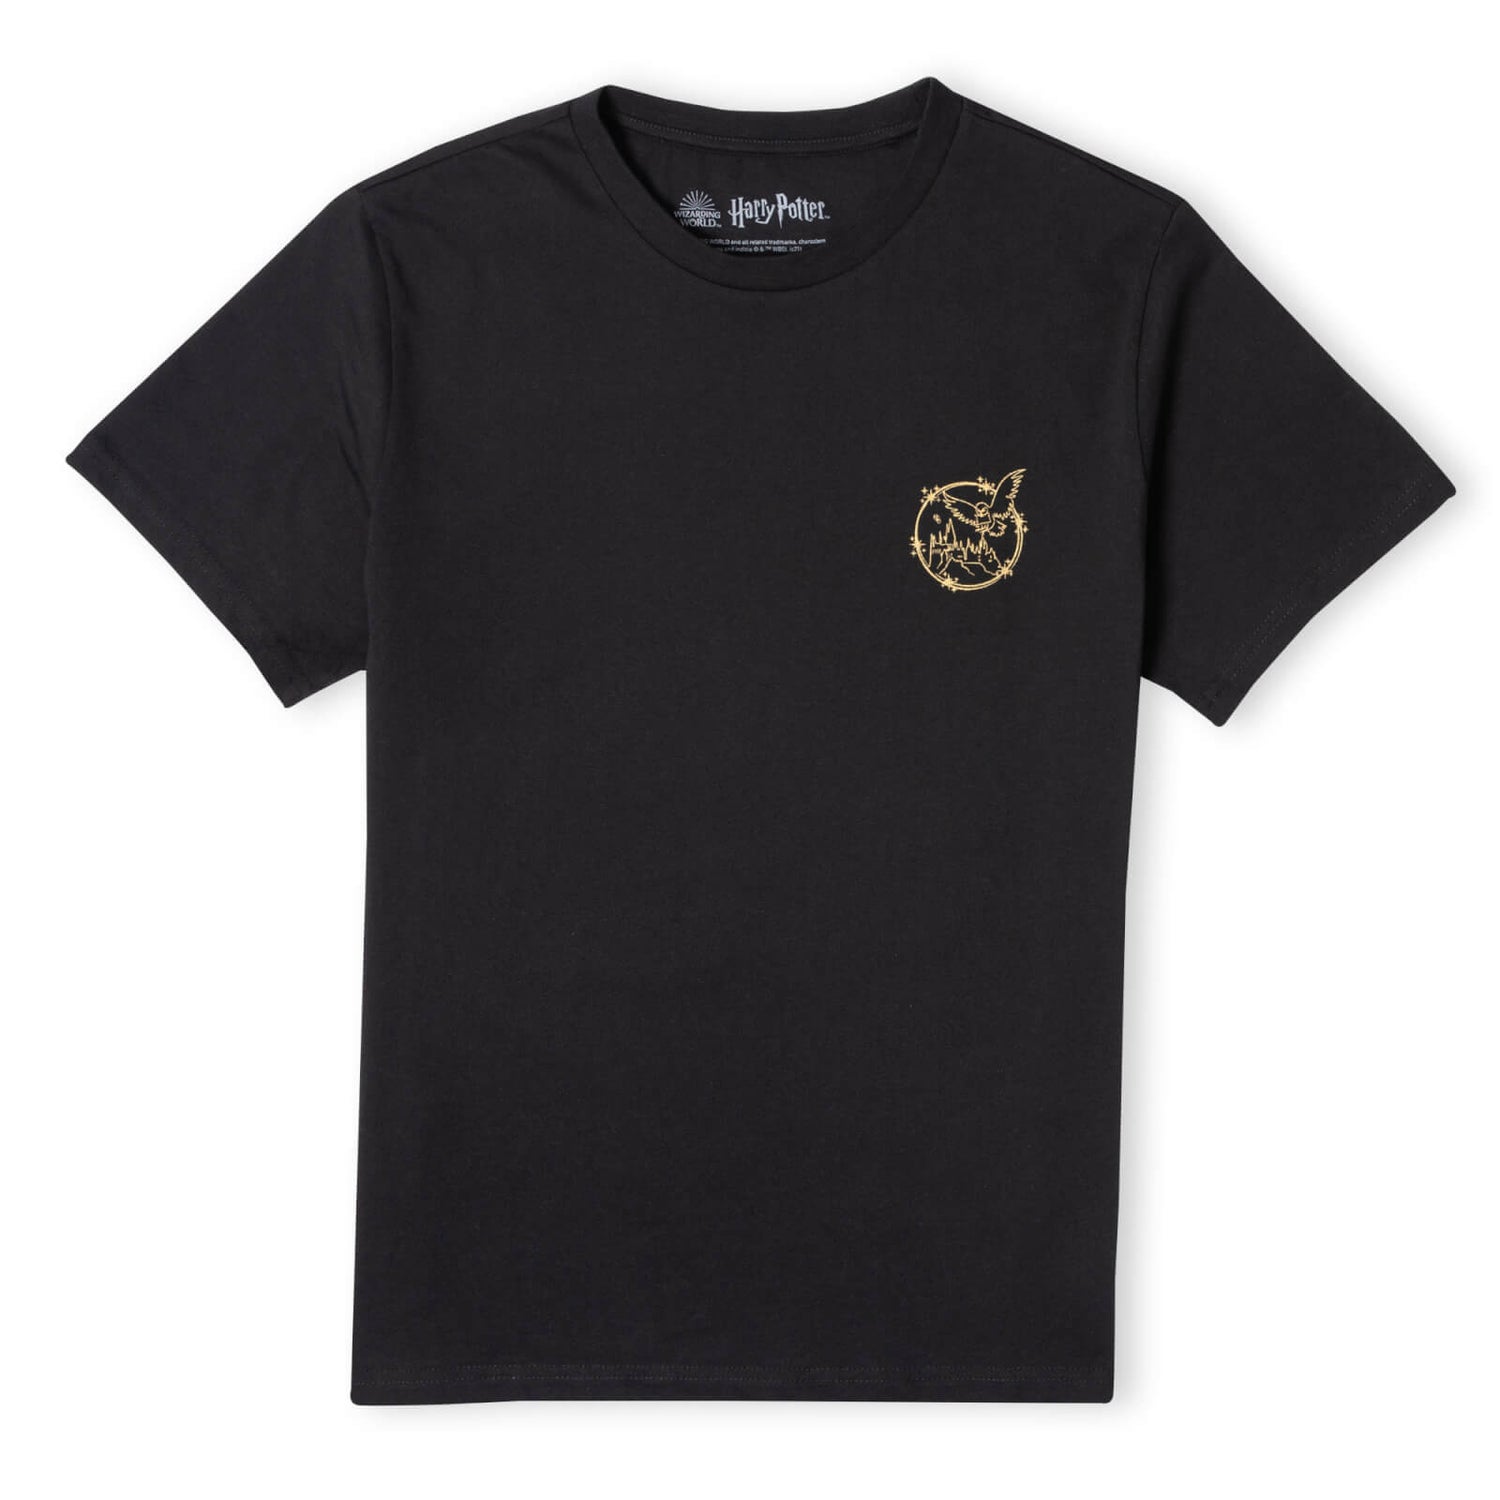 Harry Potter Metallic Pocket Print Men's T-Shirt - Black